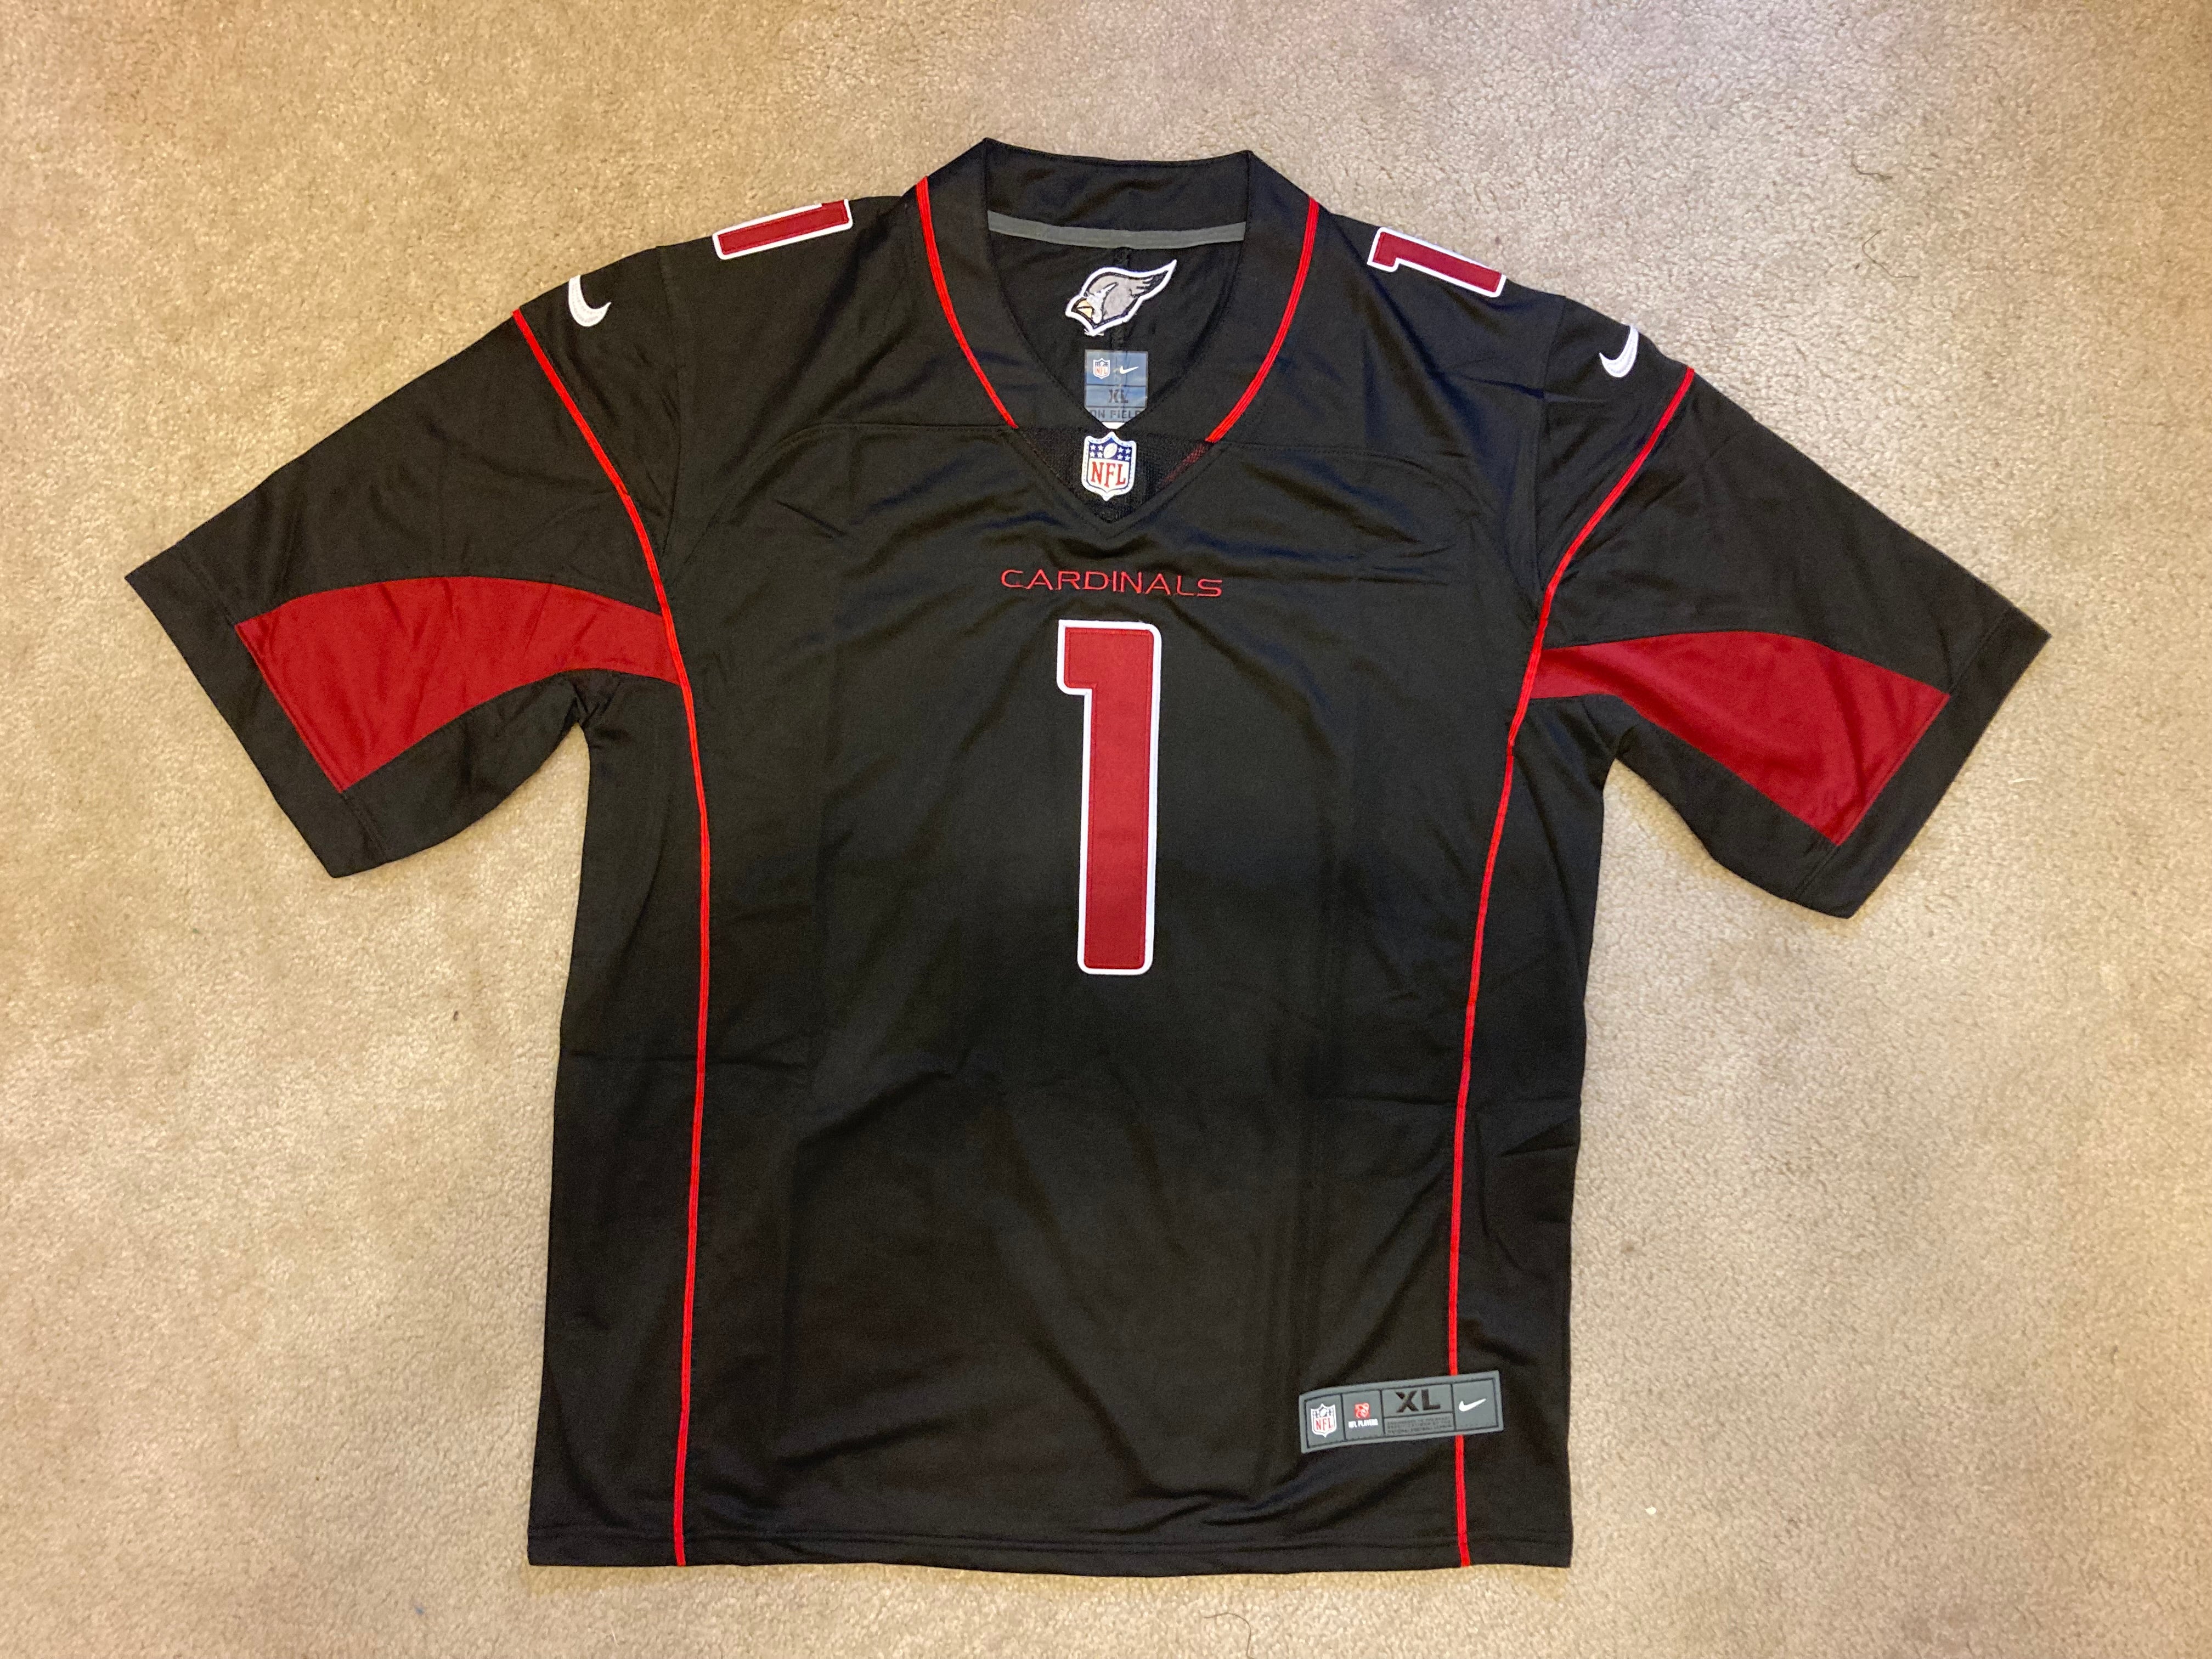 NEW - Men's Stitched Nike NFL Jersey - Kyler Murray - Cardinals